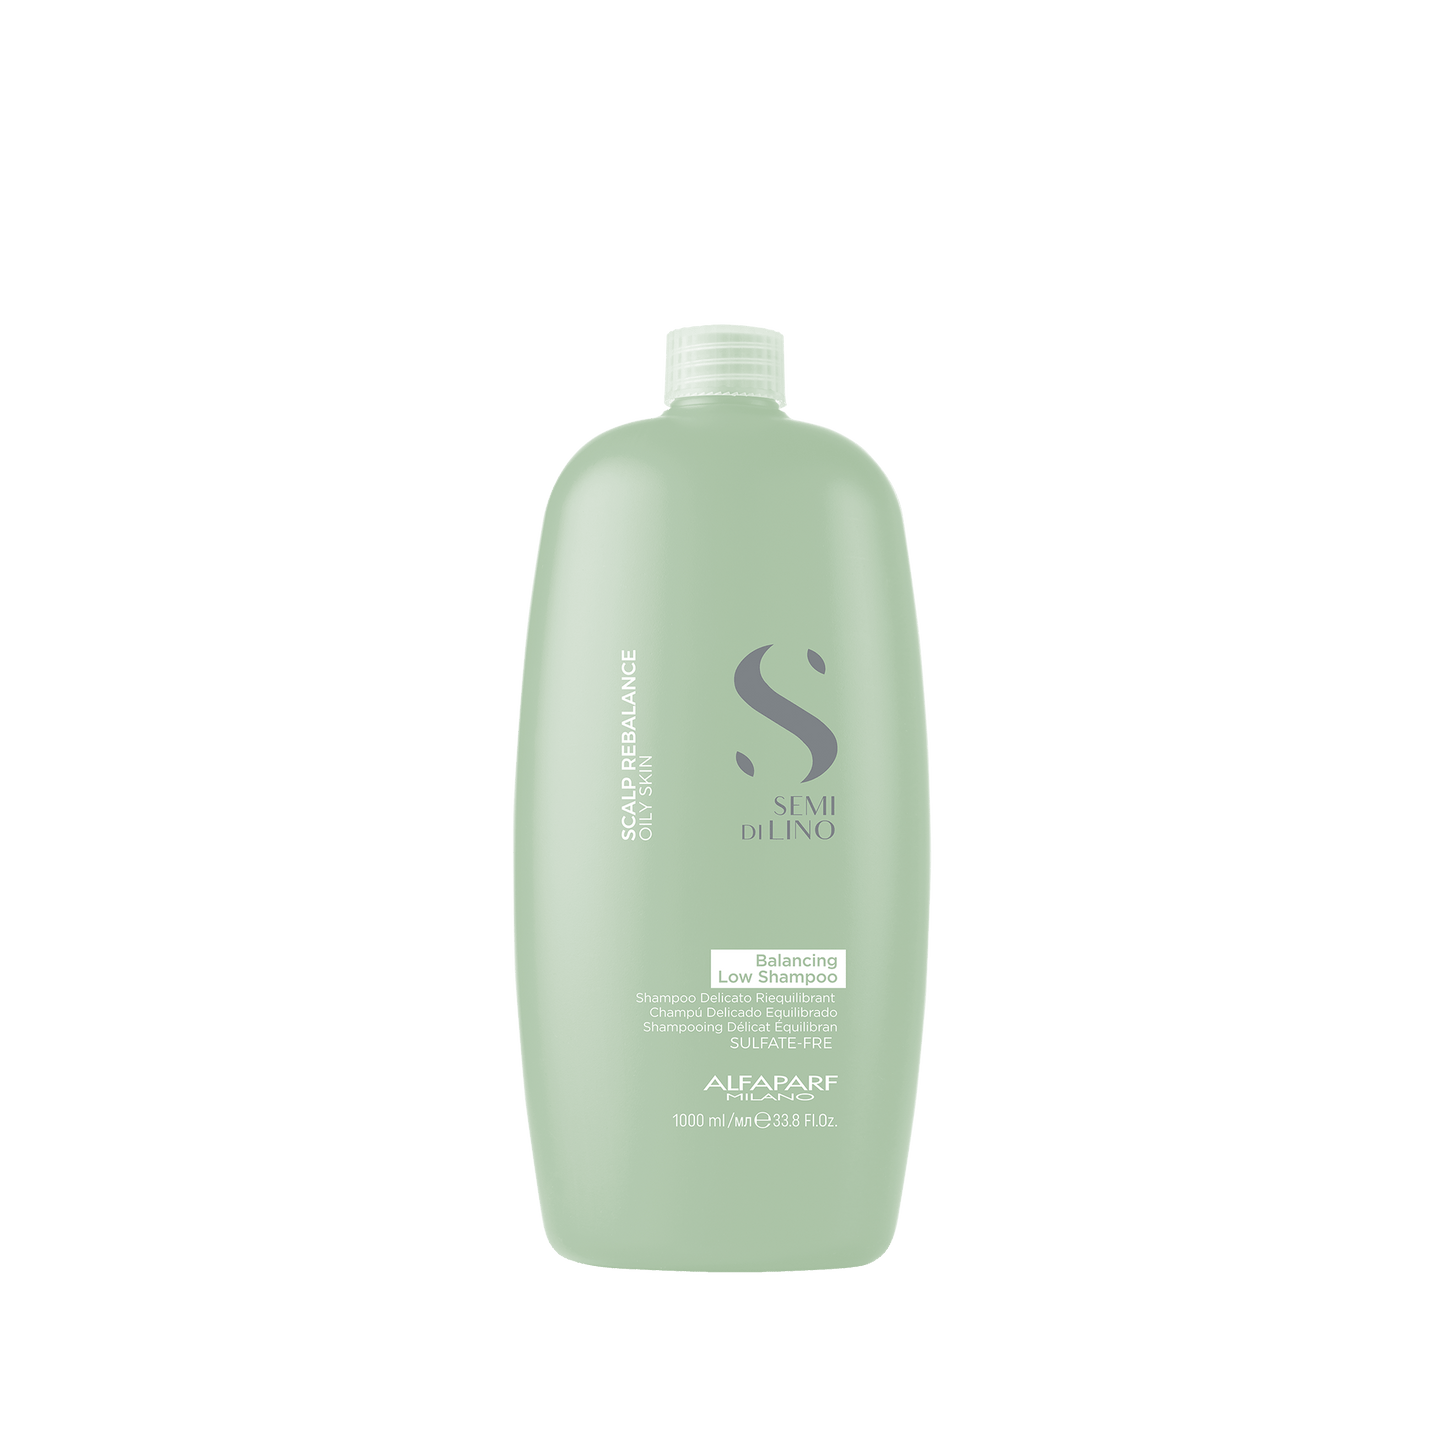 ALFAPARF SEMI DI LINO OILY SKIN Balancing Low Shampoo  250ml 1000ml 平衡油份洗頭水 (動搜買任何三件八折)